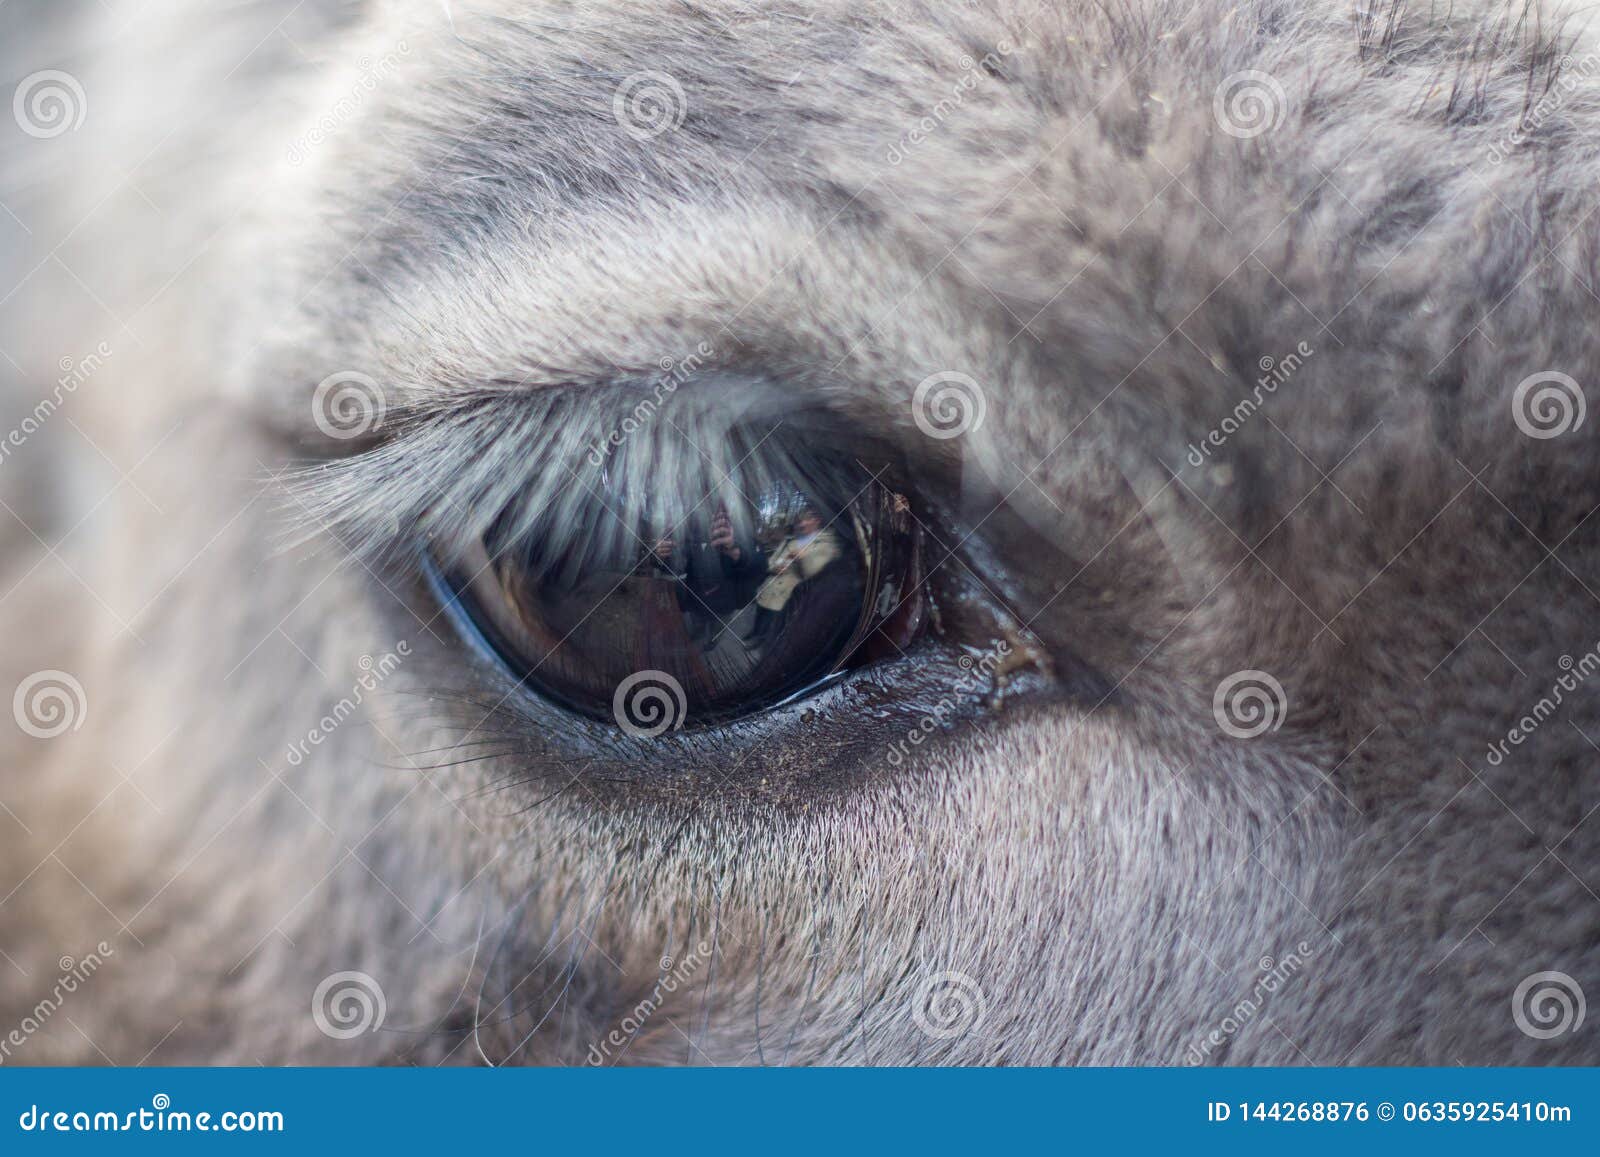 Llama eye close up stock photo. Image of looking, cute - 144268876